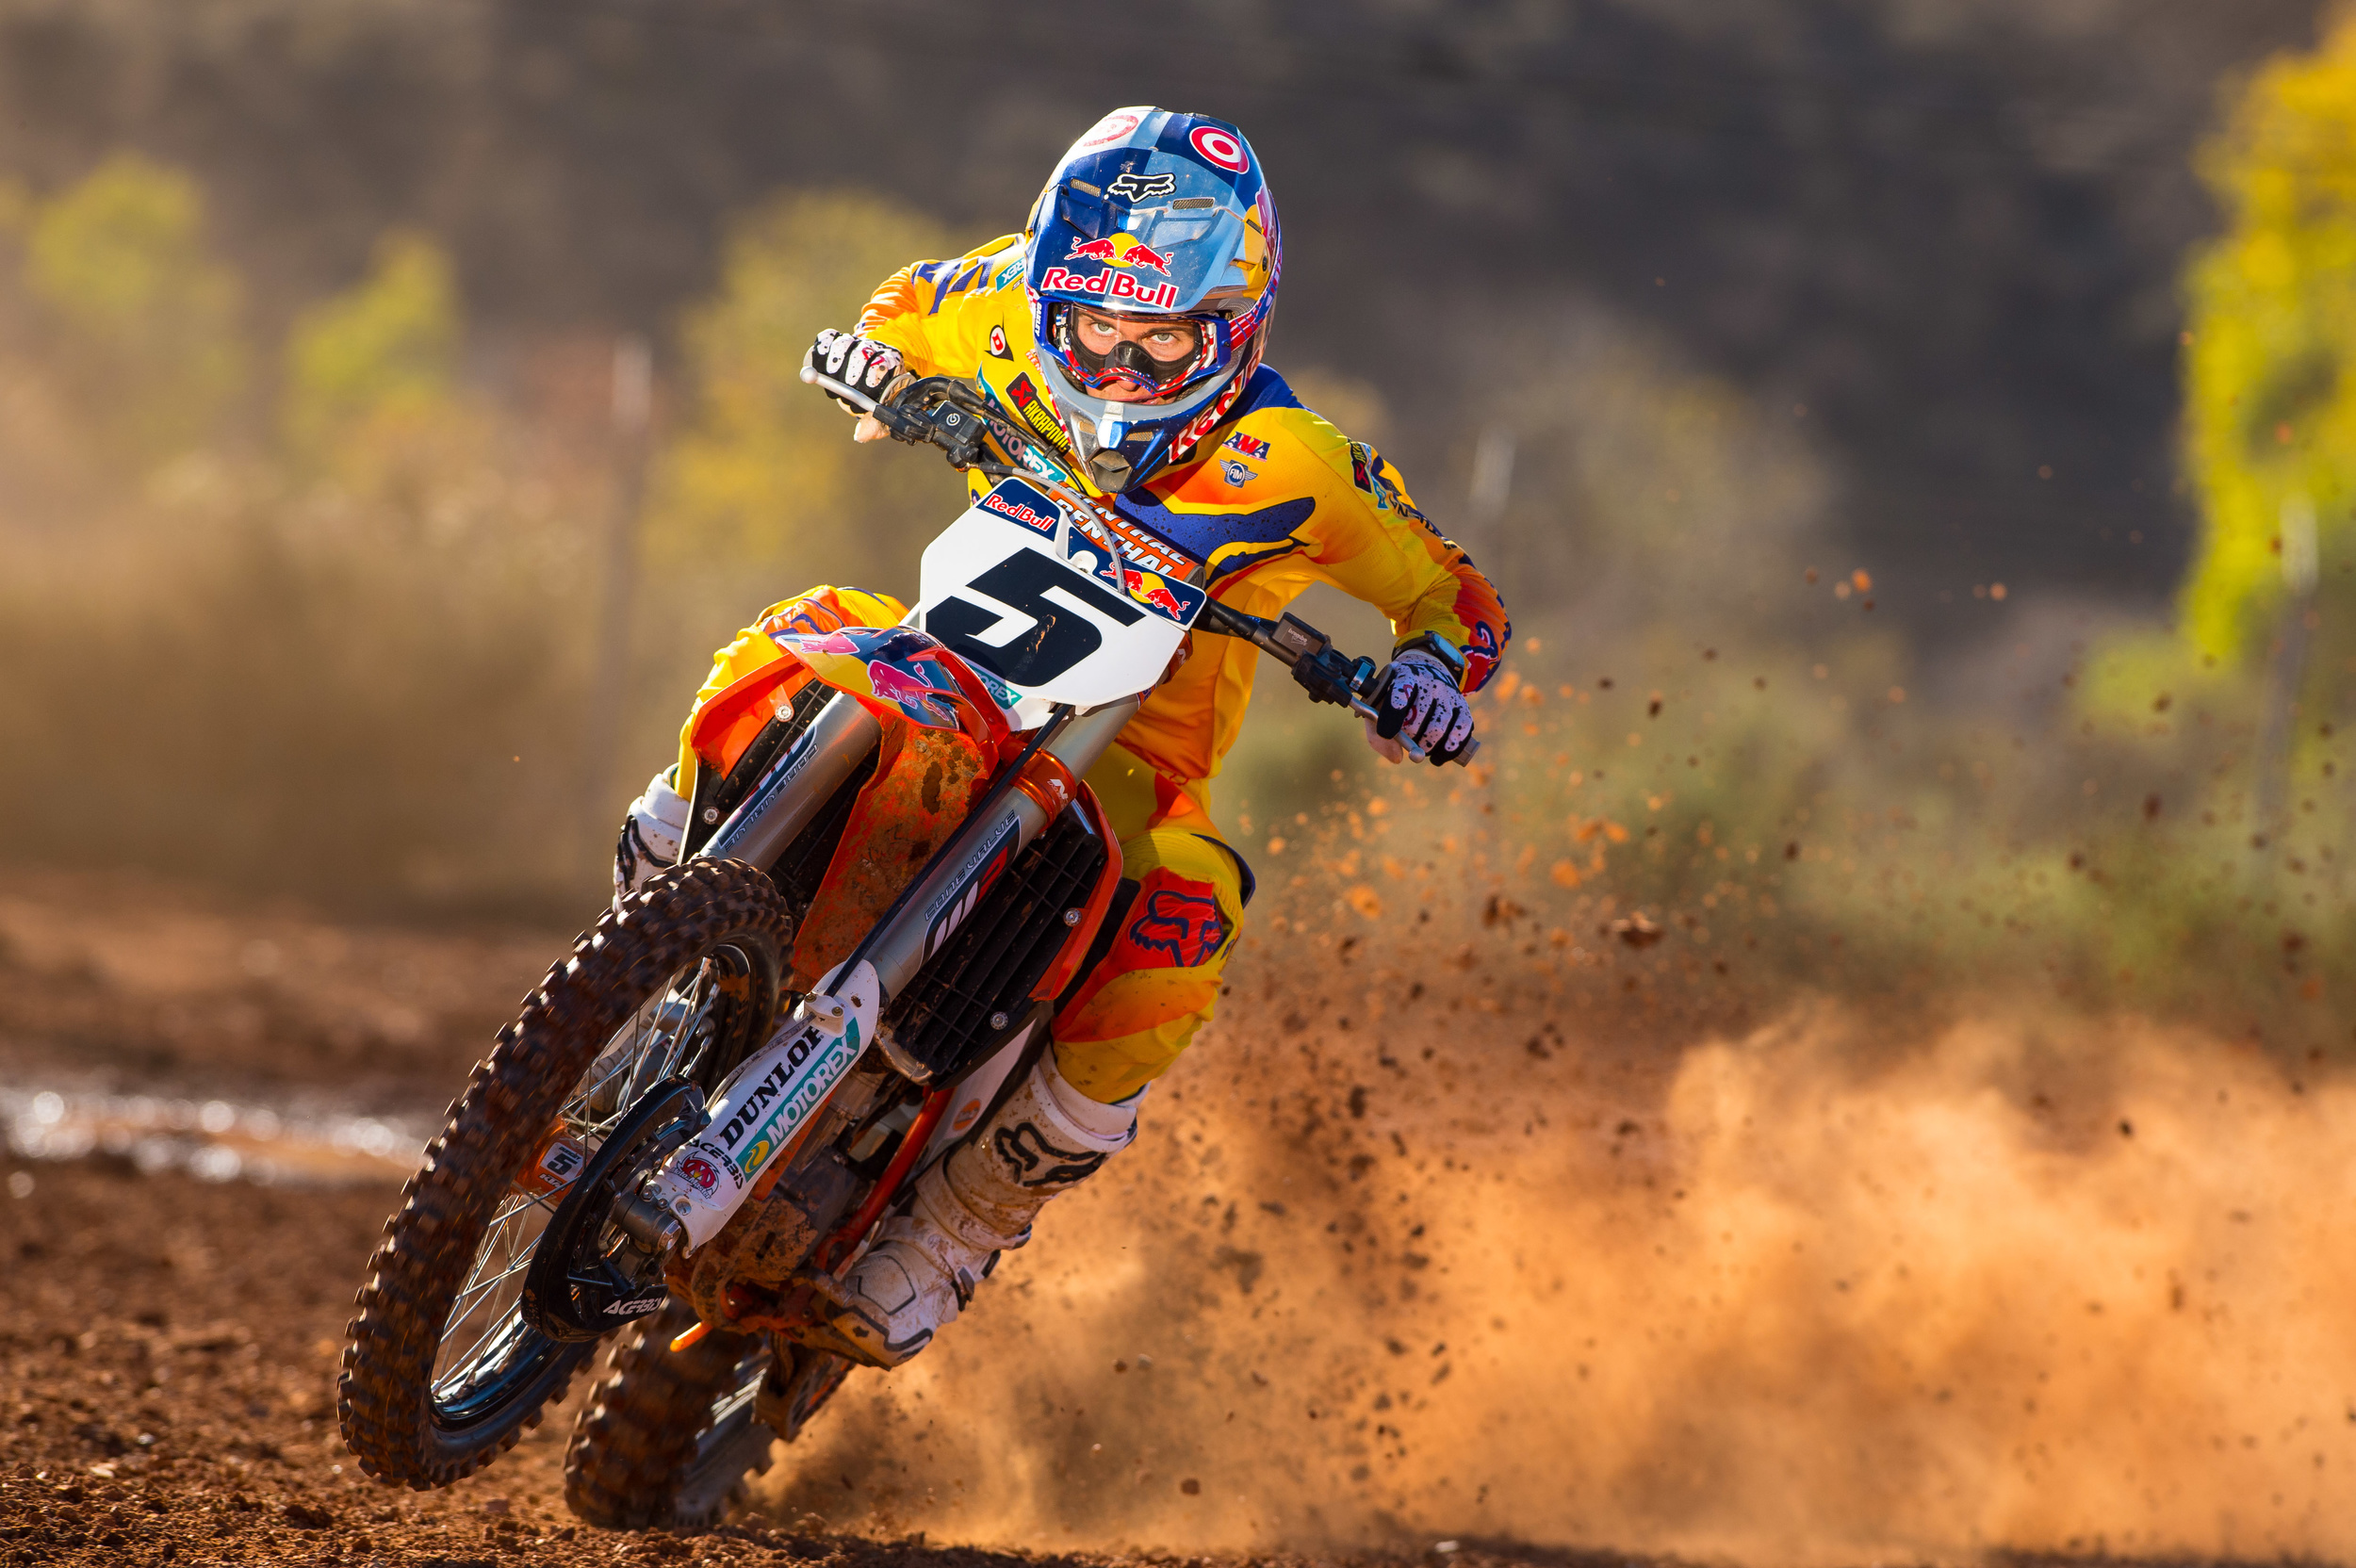 Simon Cudby Photo/Video - Motocross Shoots